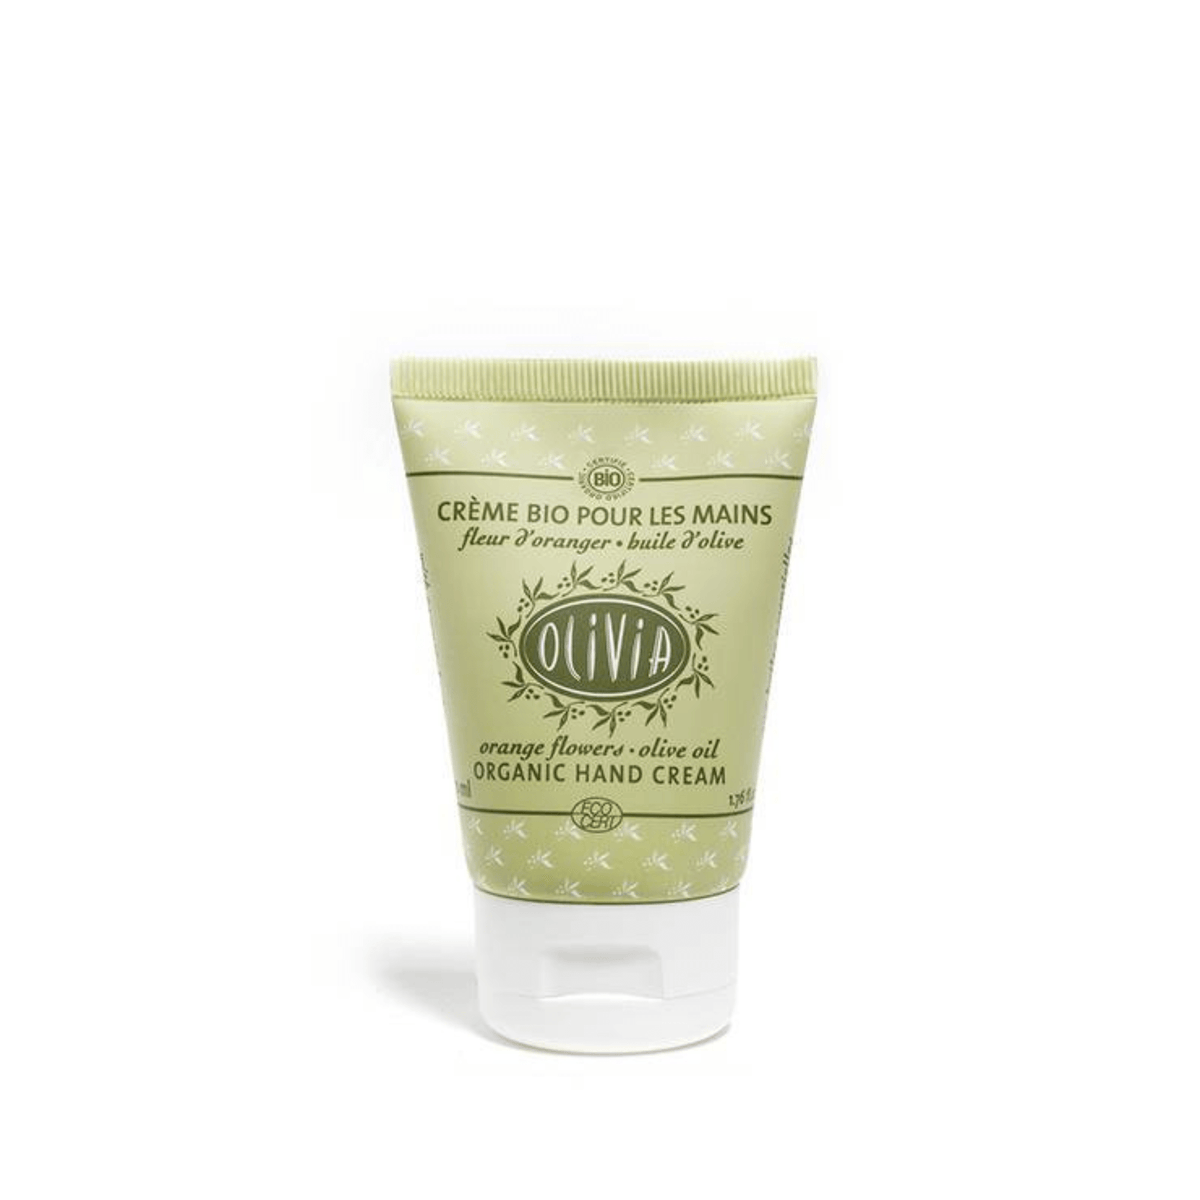 Primary Image of OLIVIA Organic Hand Cream